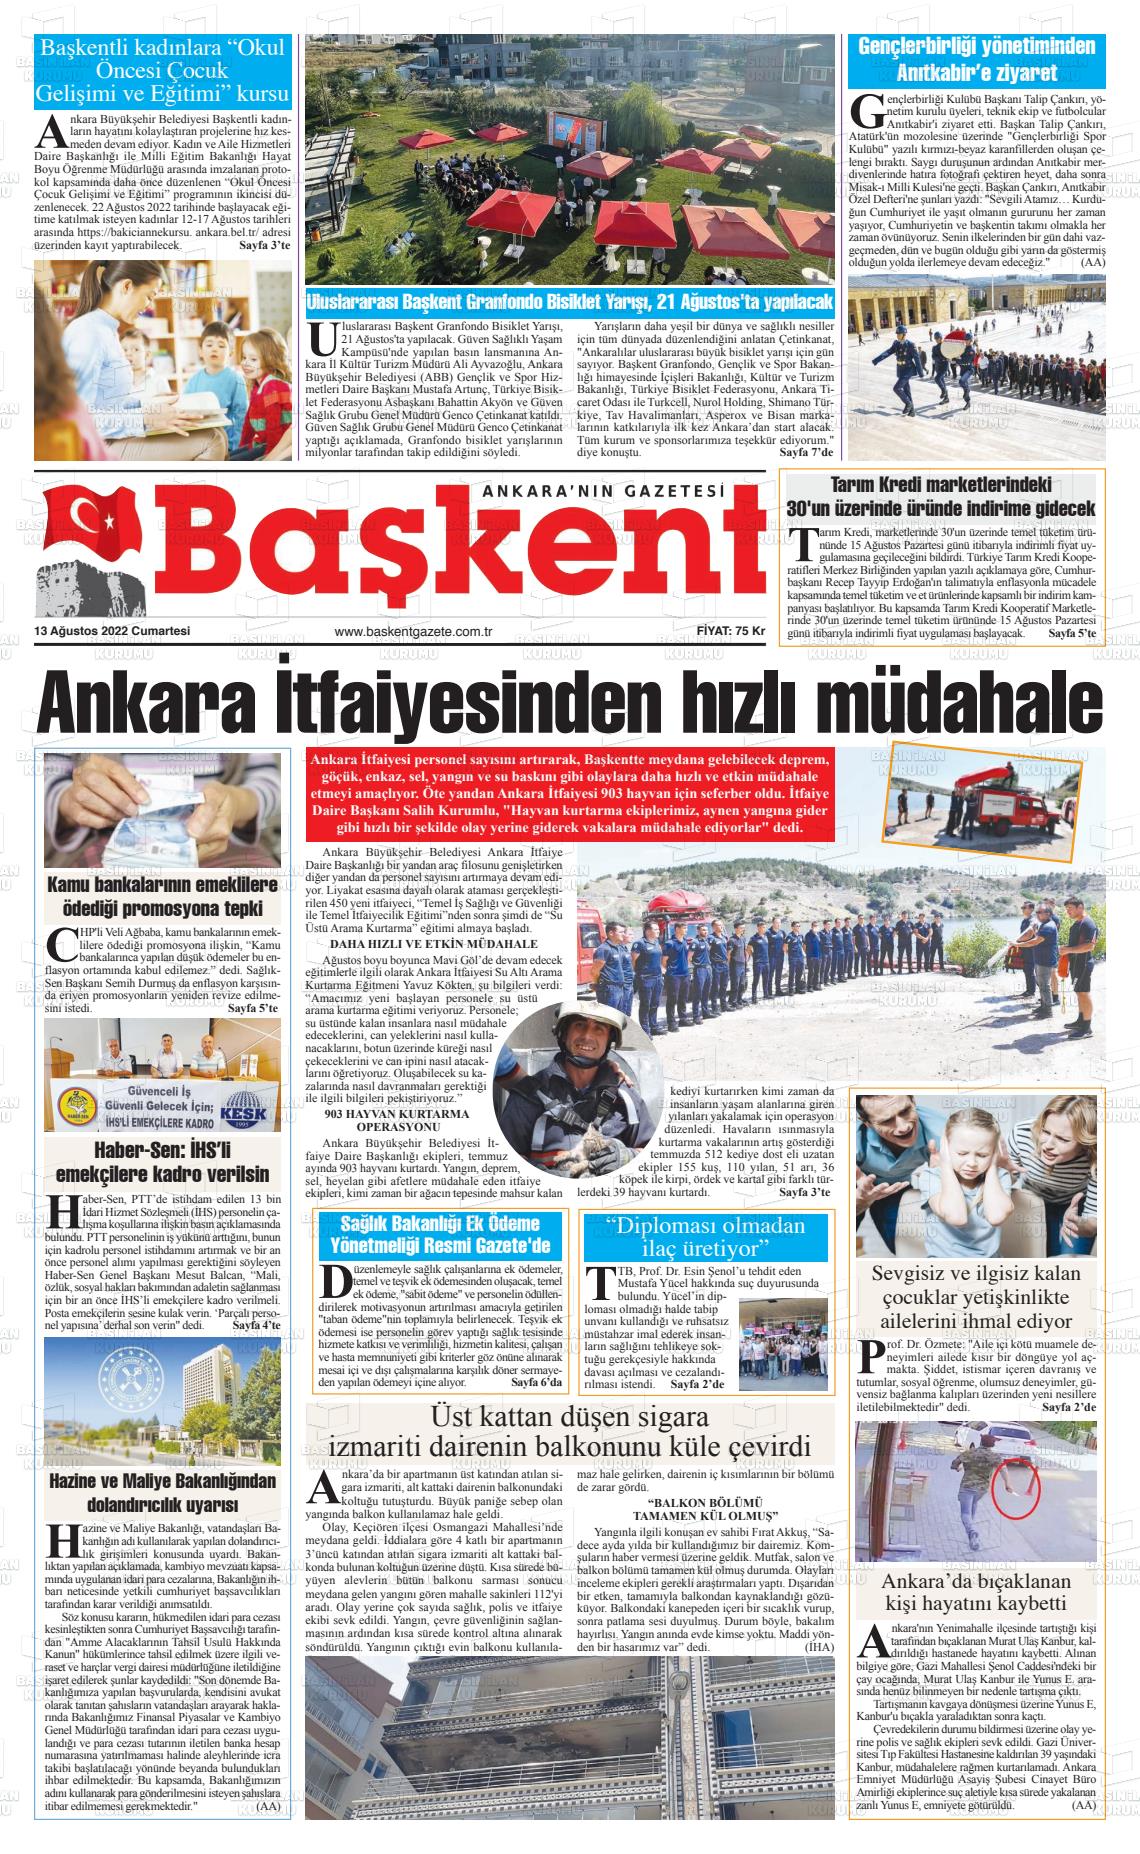 13 Ağustos 2022 Ankara Başkent Gazete Manşeti